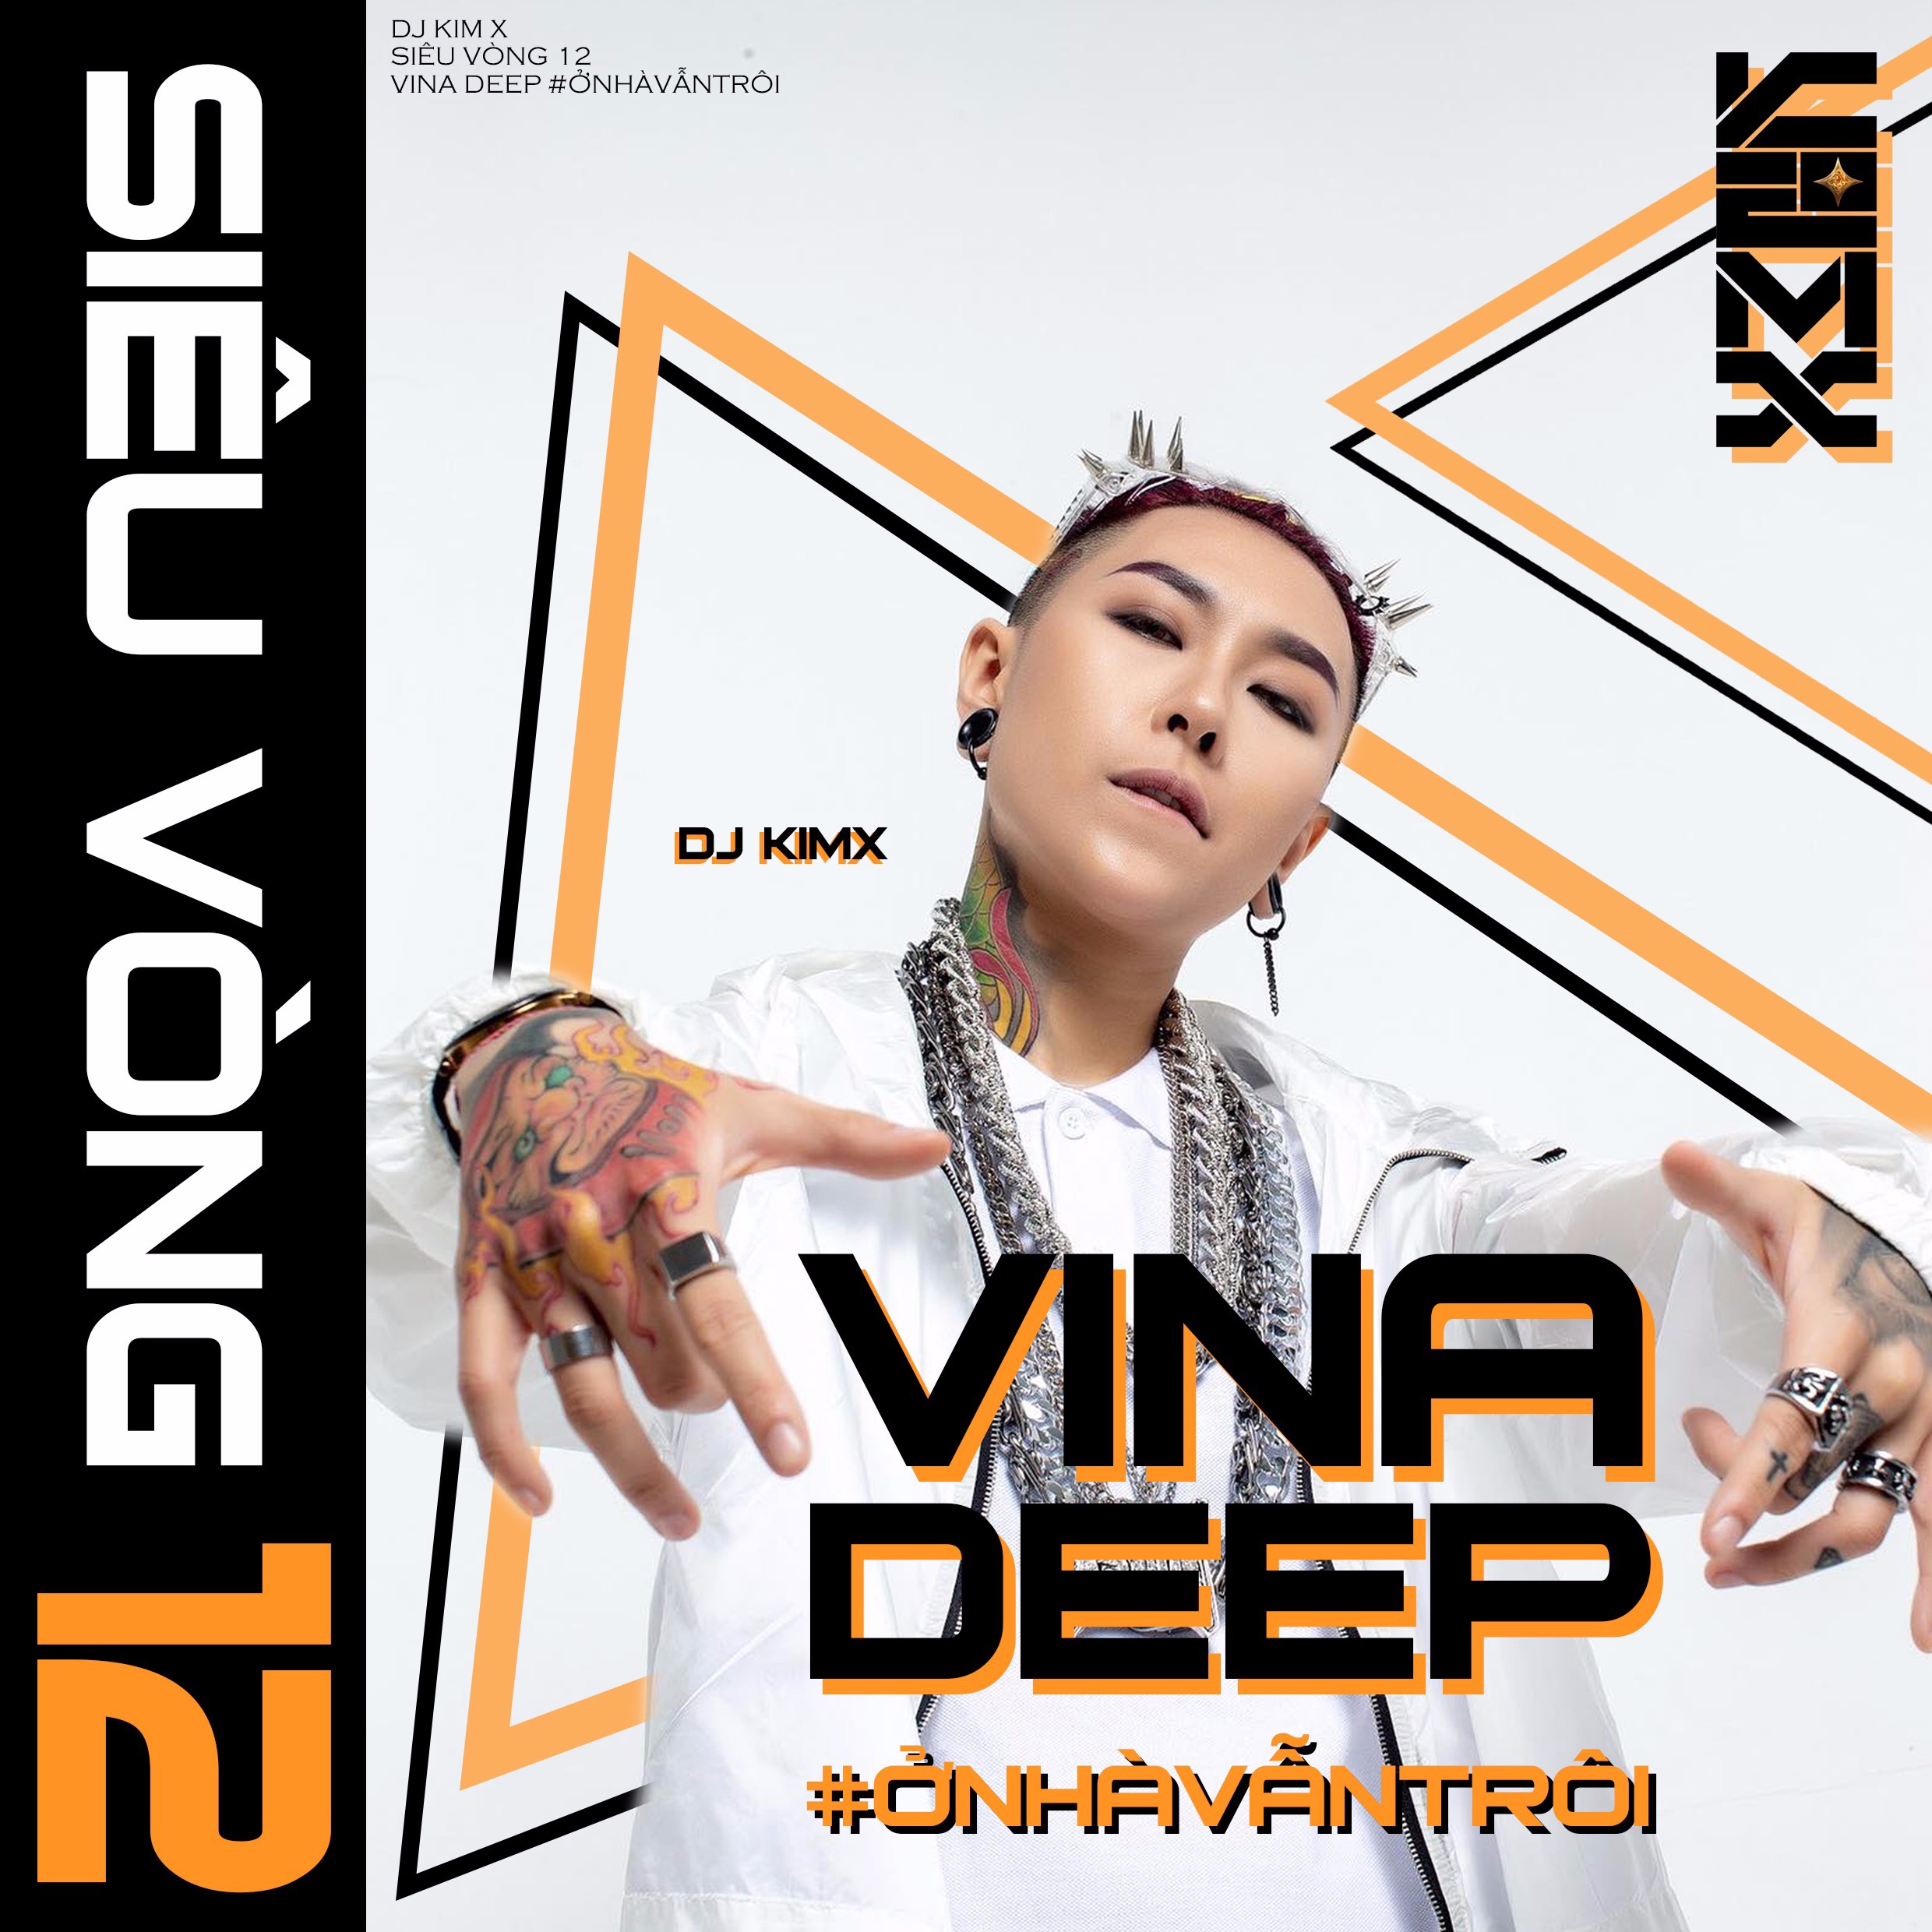 ڈاؤن لوڈ کریں #ỞNHÀVẪNTRÔI --- DJ KIMX --- MIXSET KIMX SIÊU VÒNG 12 --- VINADEEP